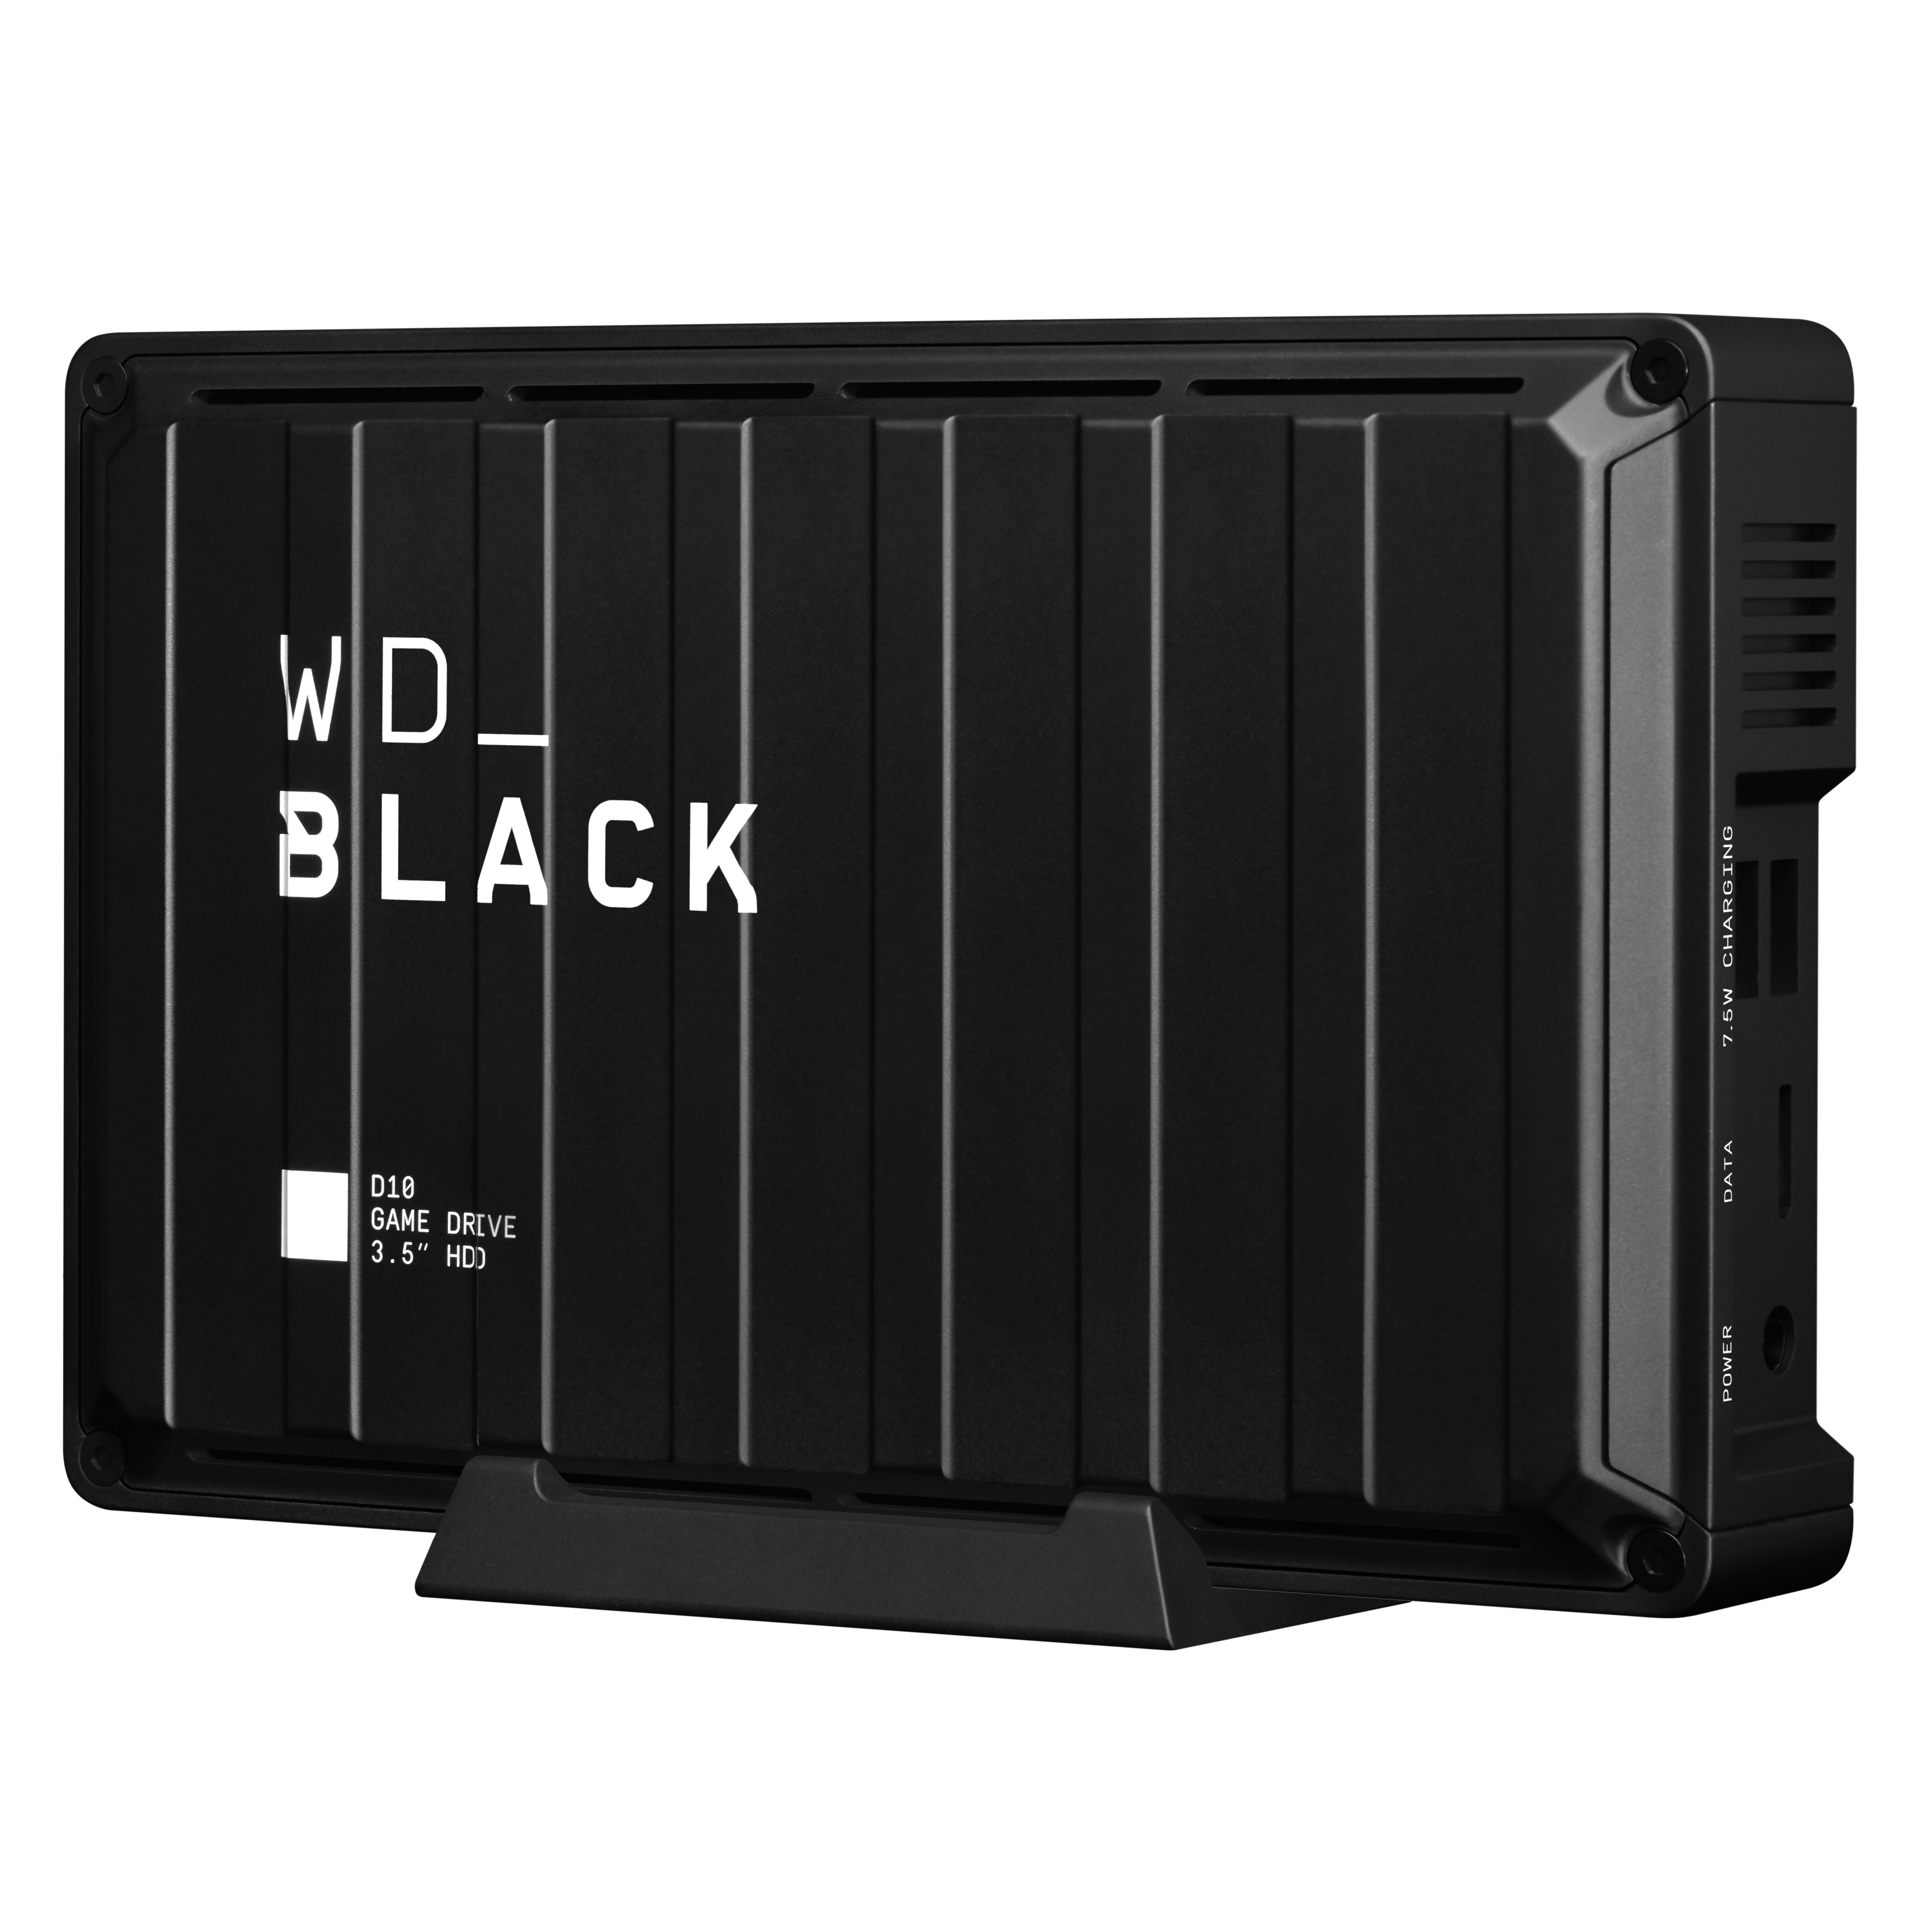 WD_BLACK™ D10 Game Drive TB, 8 Zoll, Gaming-Festplatte, Schwarz/Weiß 3,5